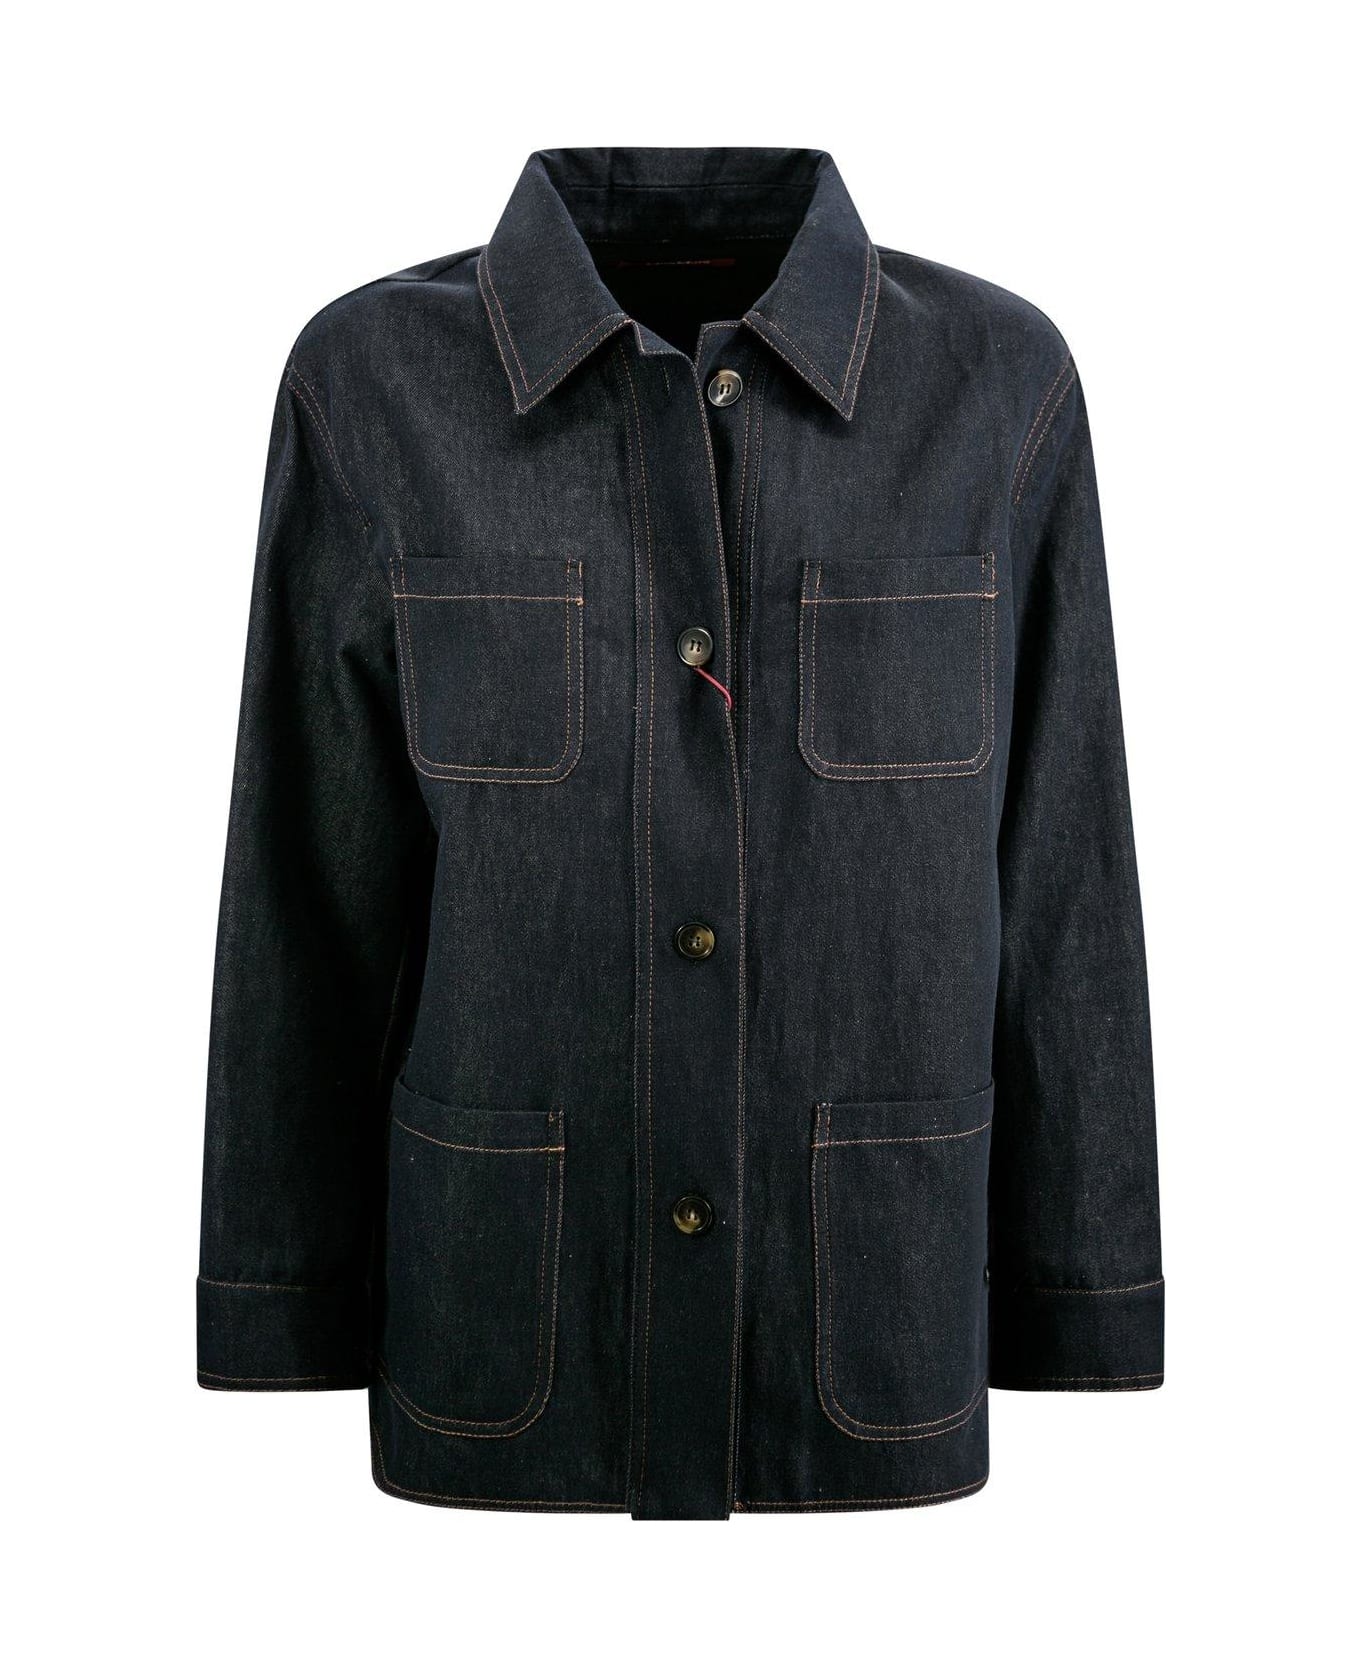 Max Mara Studio Buttoned Long-sleeved Jacket - Blue